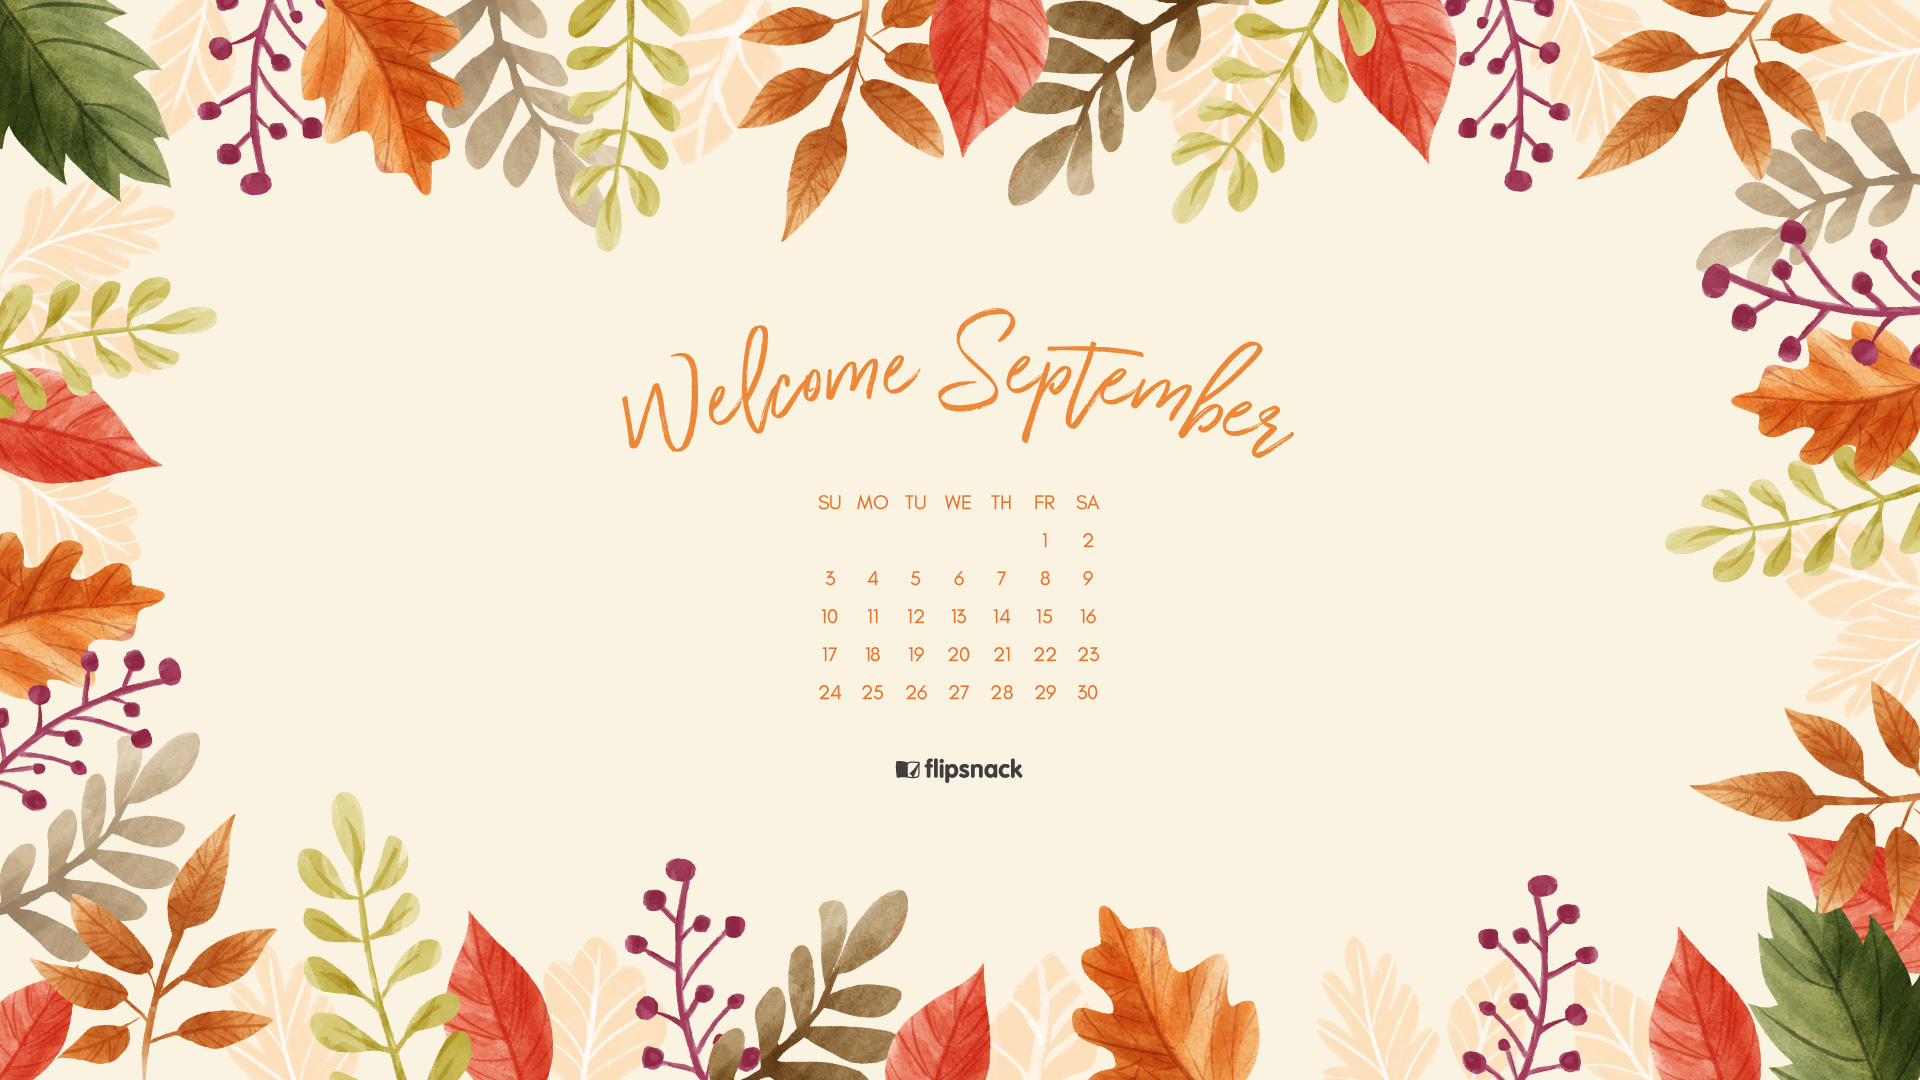 🔥 Free download Your September calendar wallpaper is here Get it